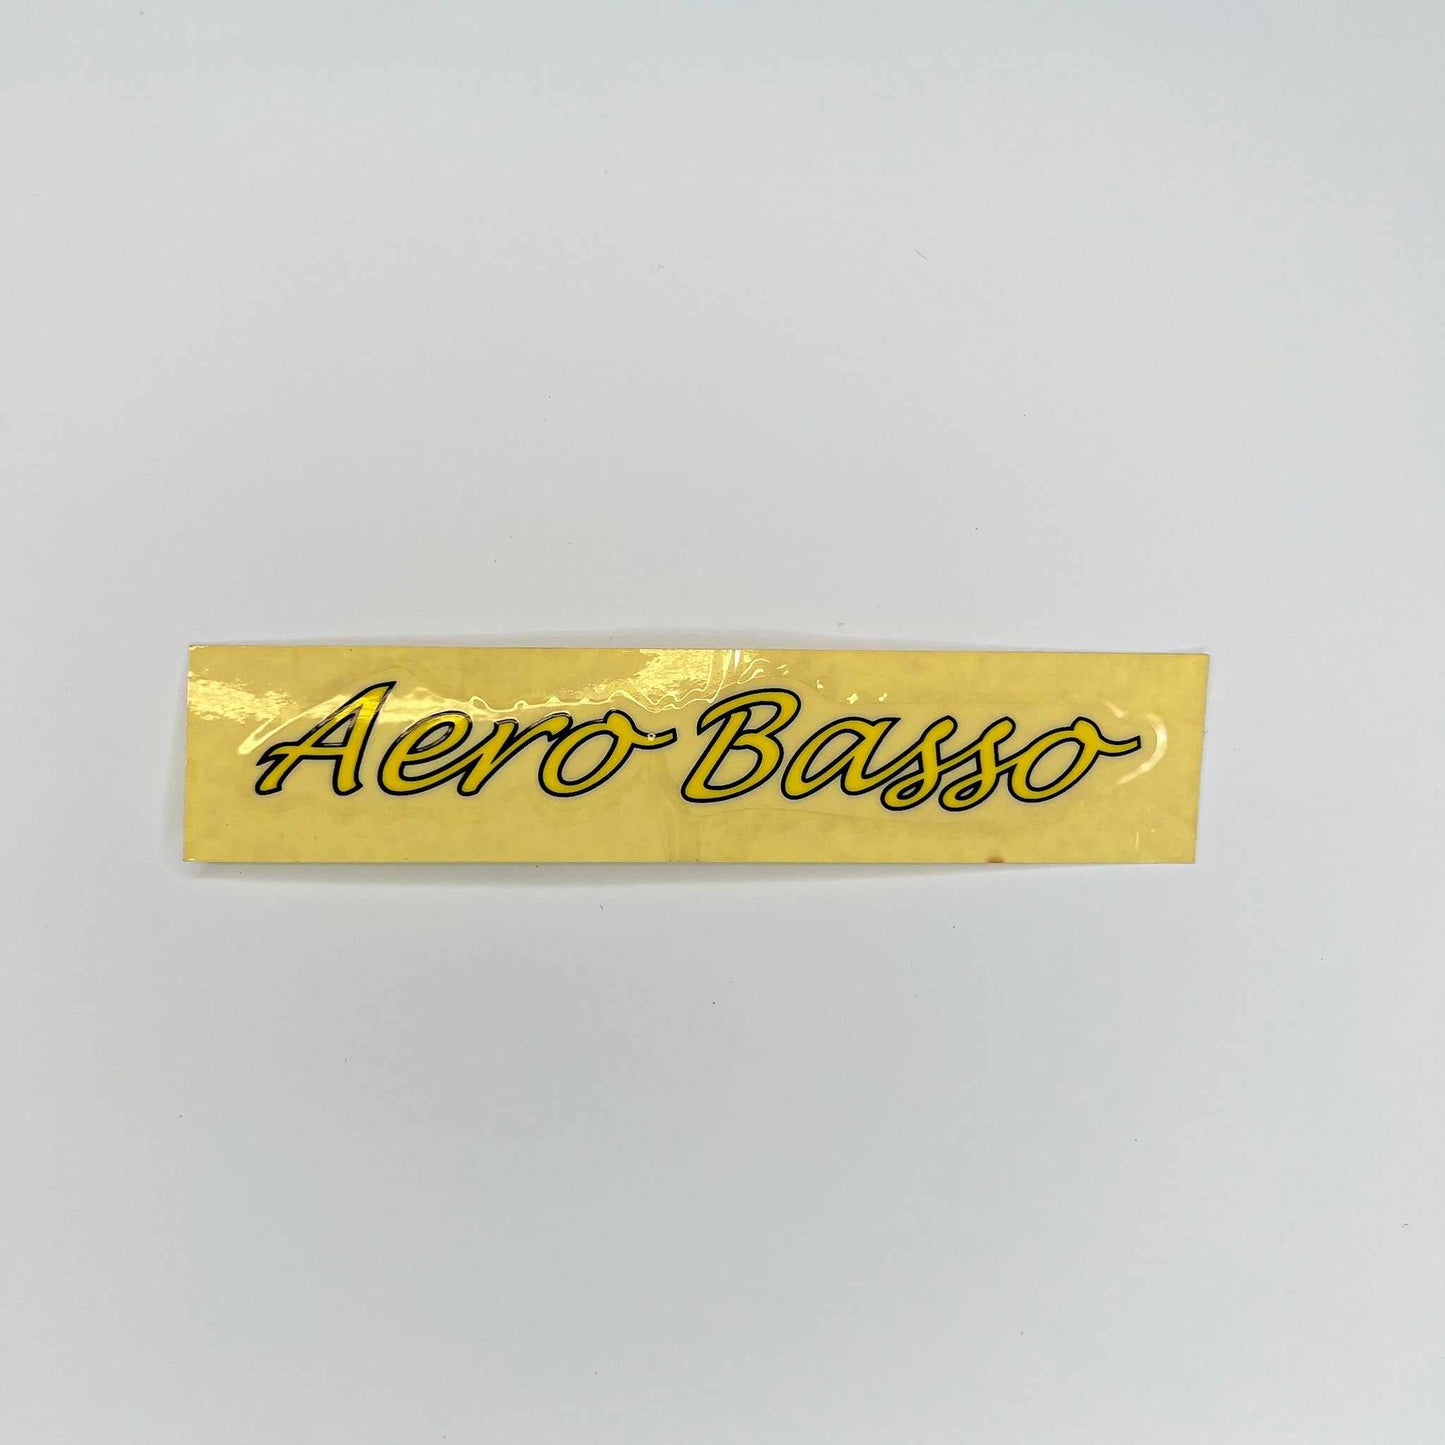 aero basso yellow logo